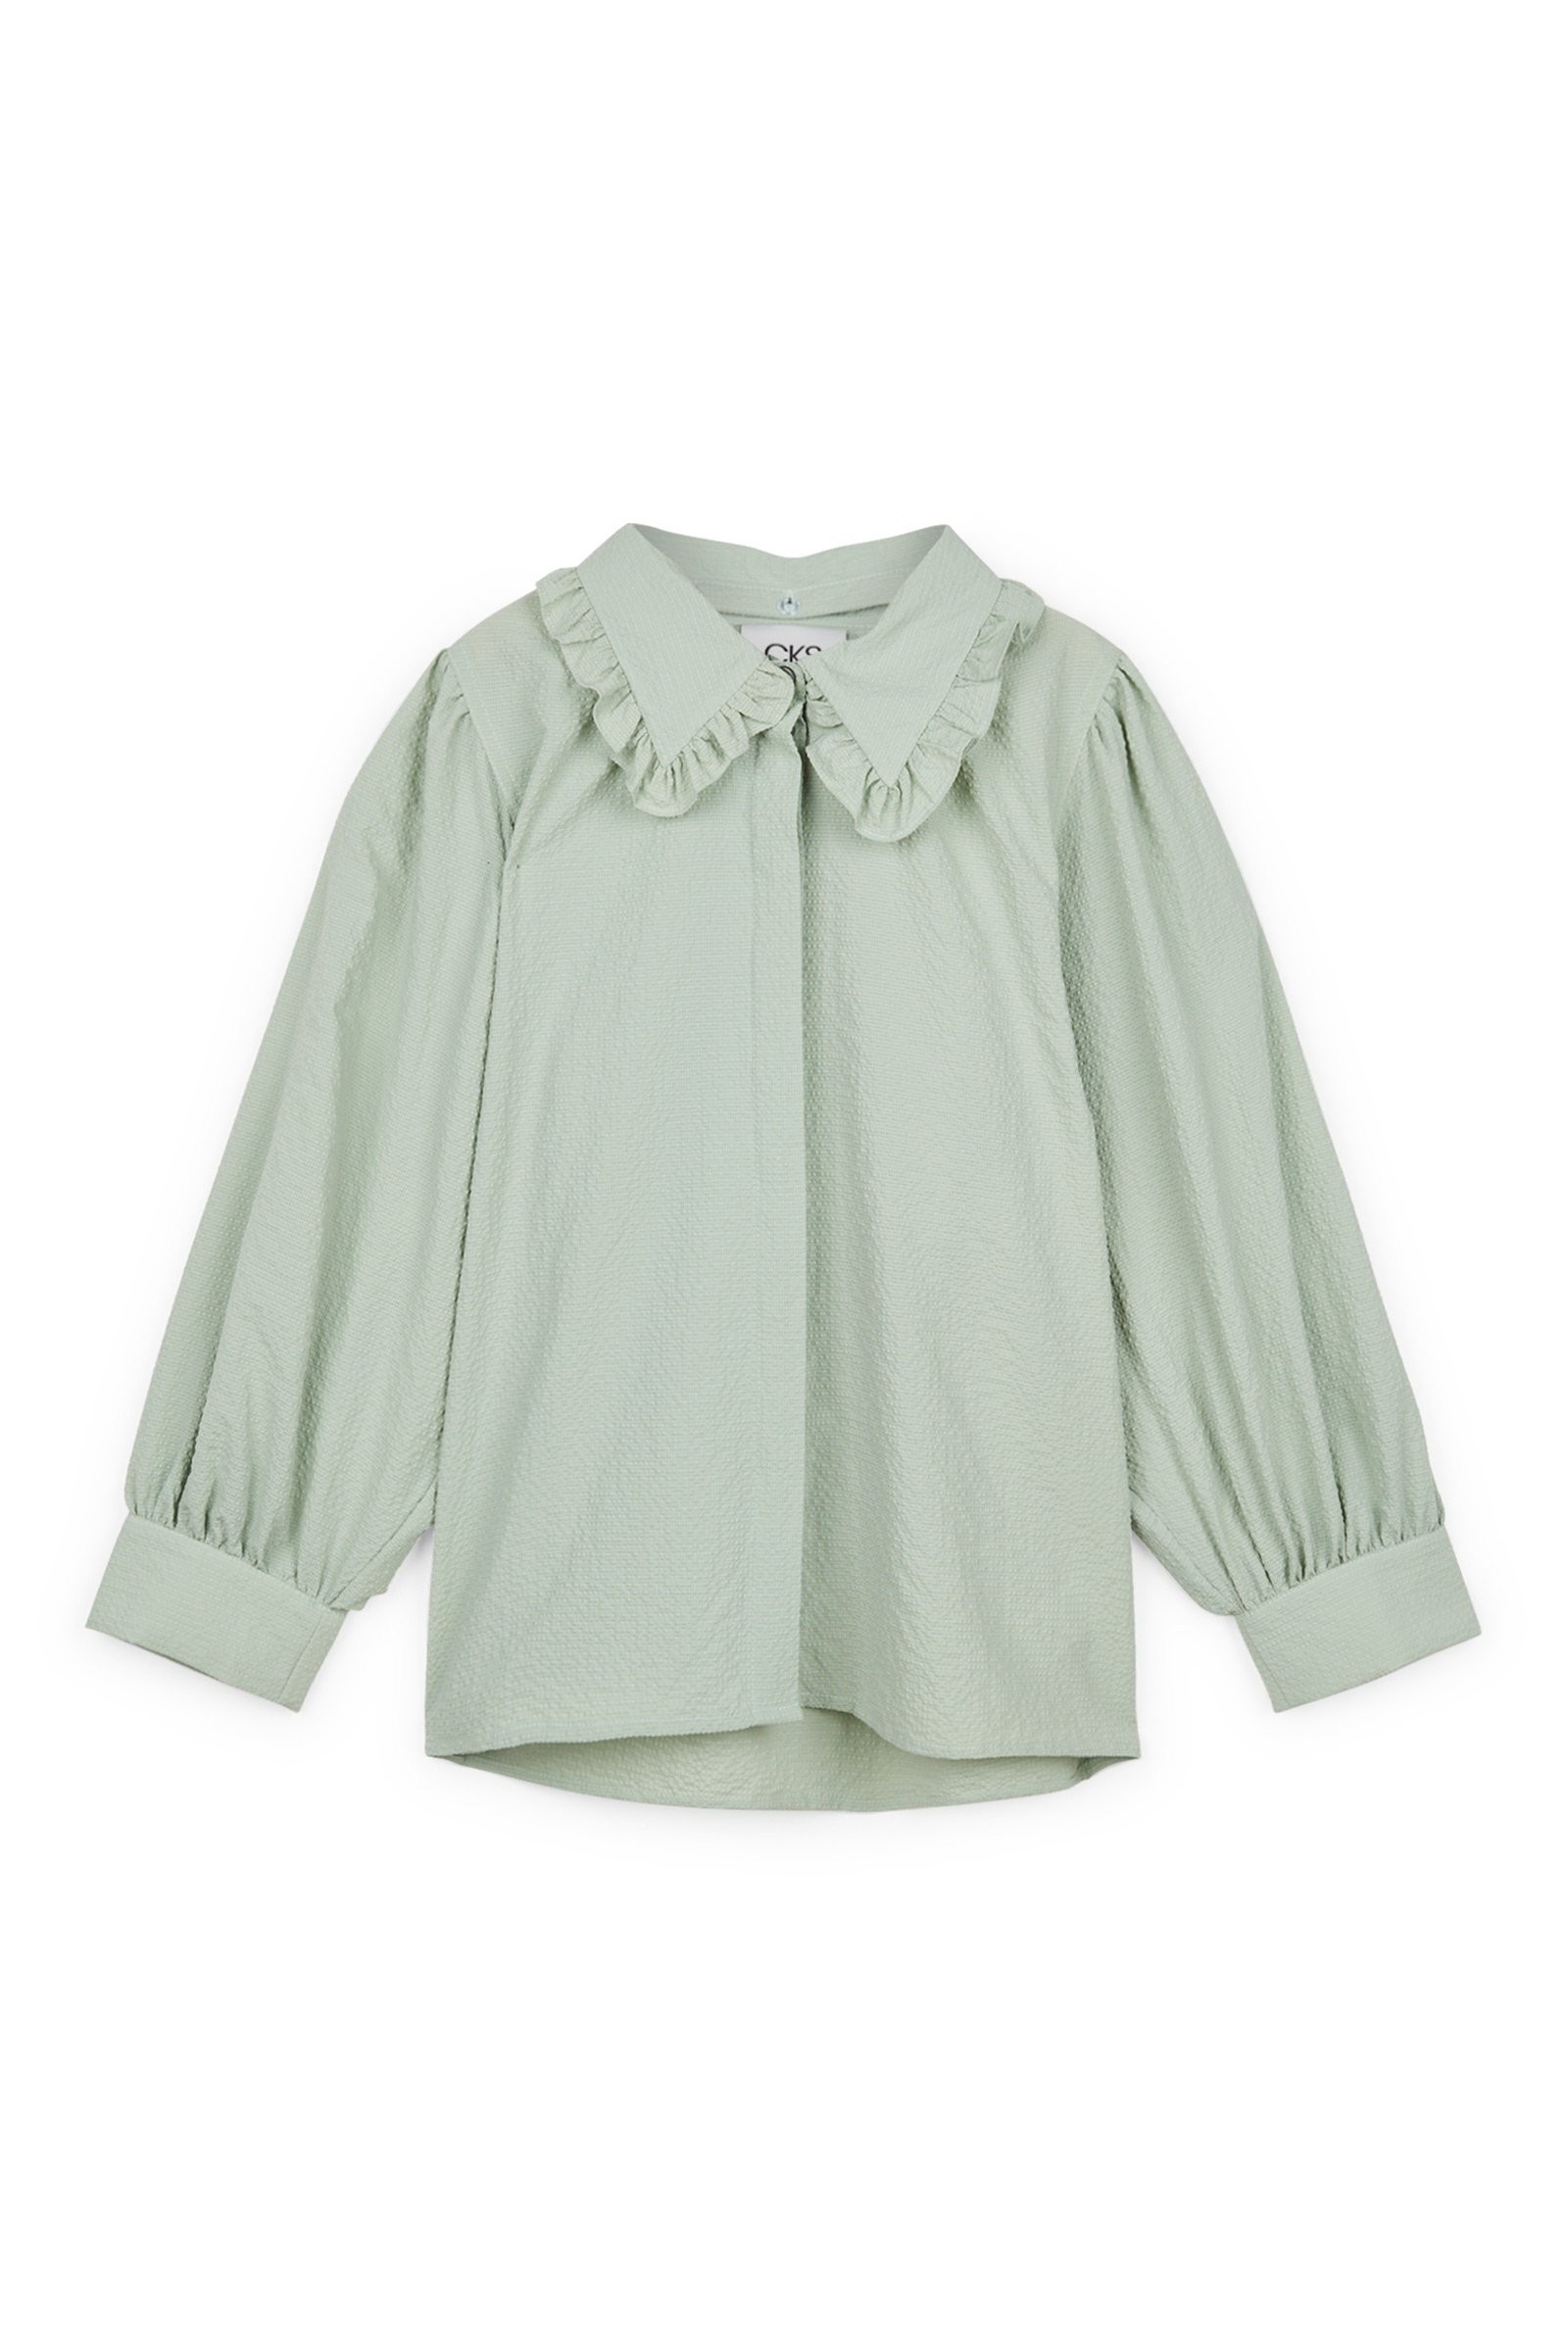 CKS Dames - ROSALINA - blouse korte mouwen - lichtgroen